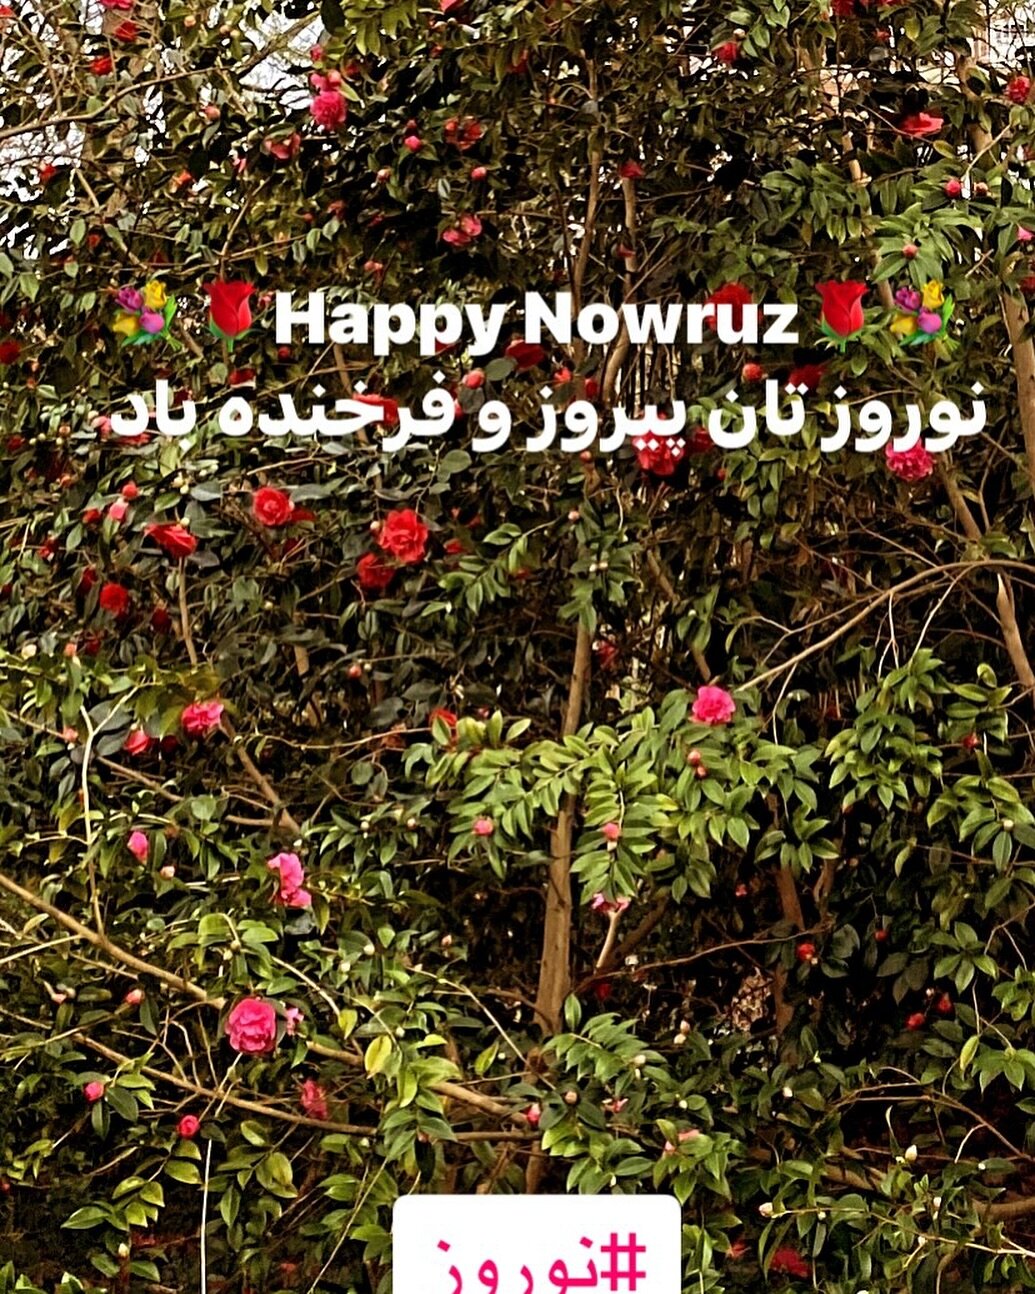 Happy Nowruz (Persian New Year)

نوروزتان پیروز و فرخنده 
#نوروز #نوروز_باستانی